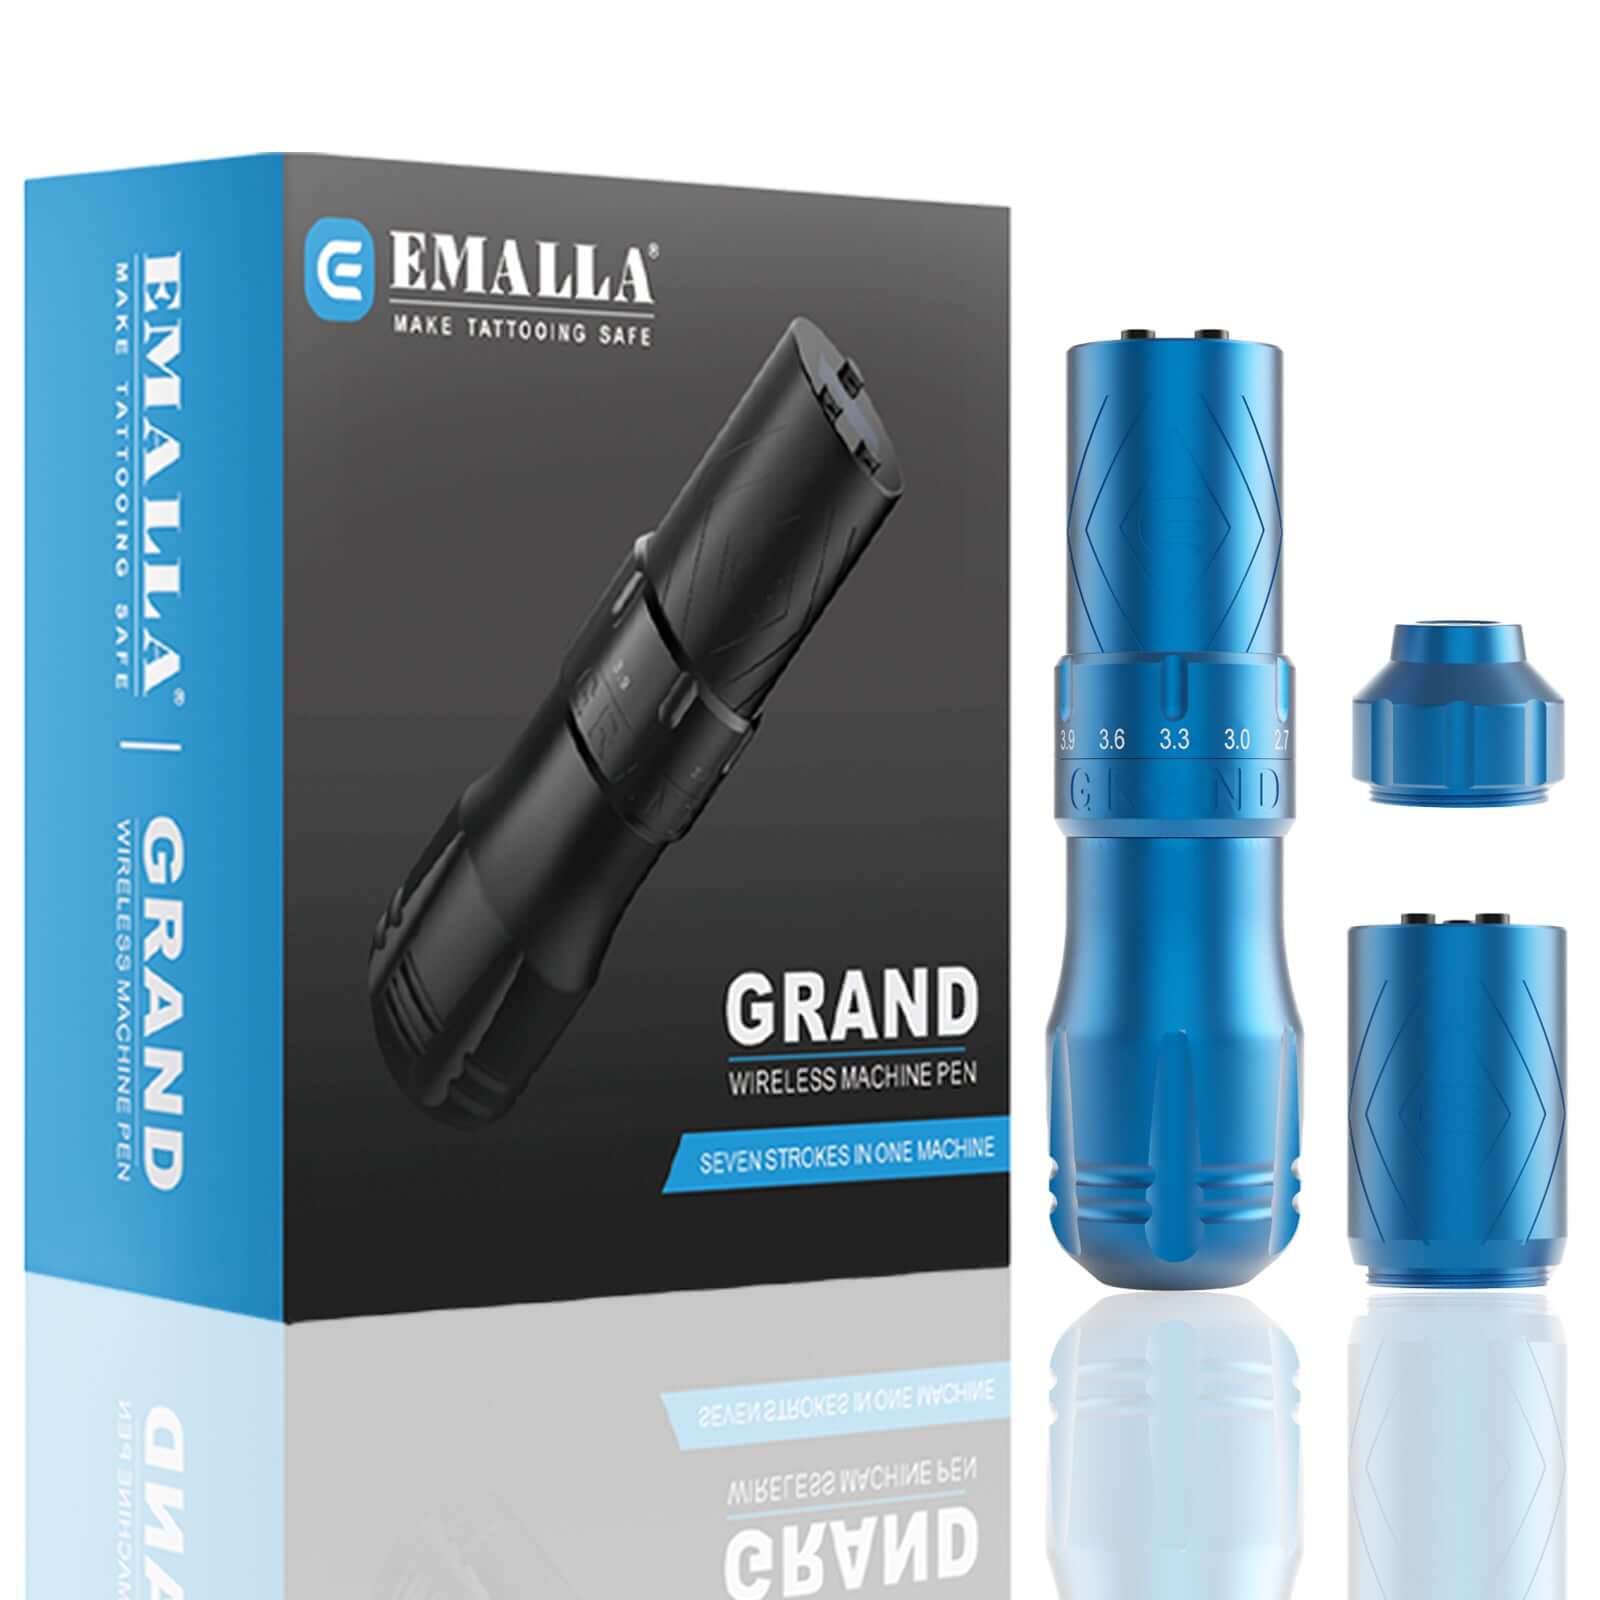 Package of EMALLA GRAND Wireless Tattoo Pen Machine (Blue)